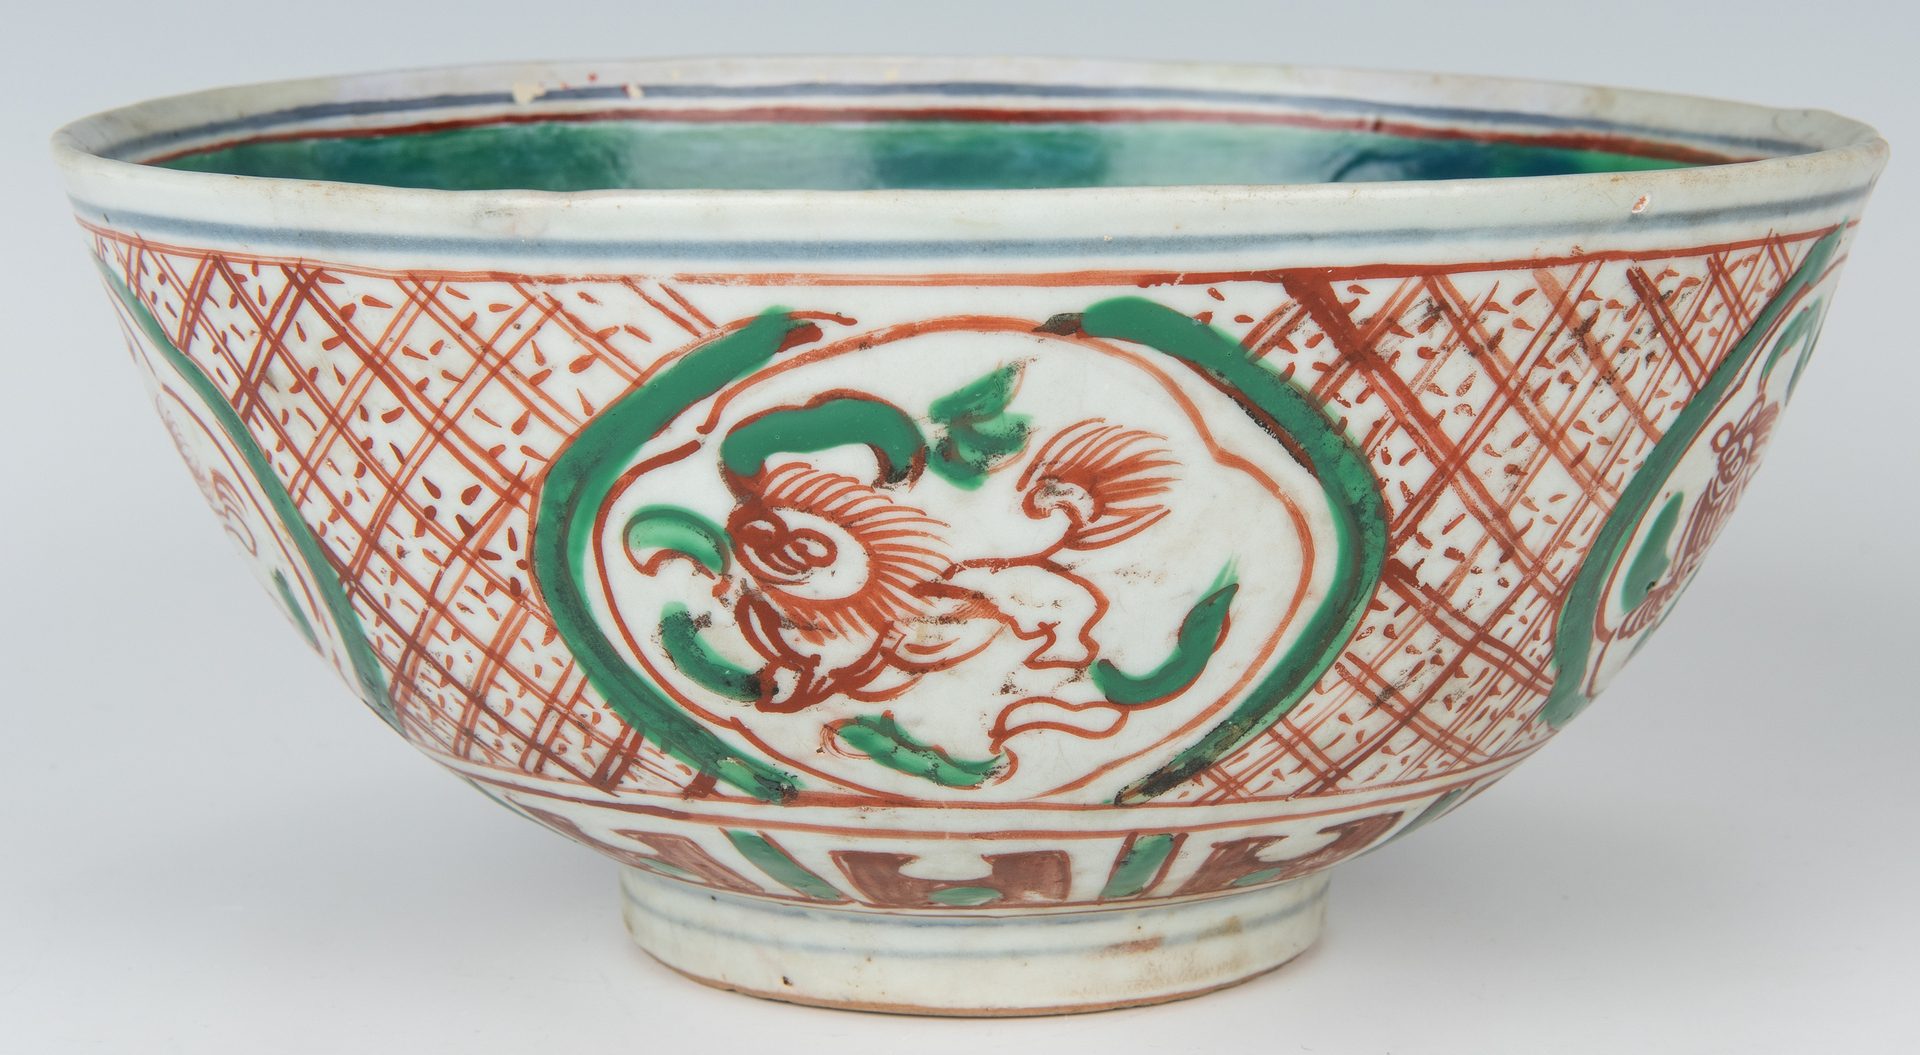 Lot 318: 5 Chinese Porcelain Bowls, Wucai & Ming